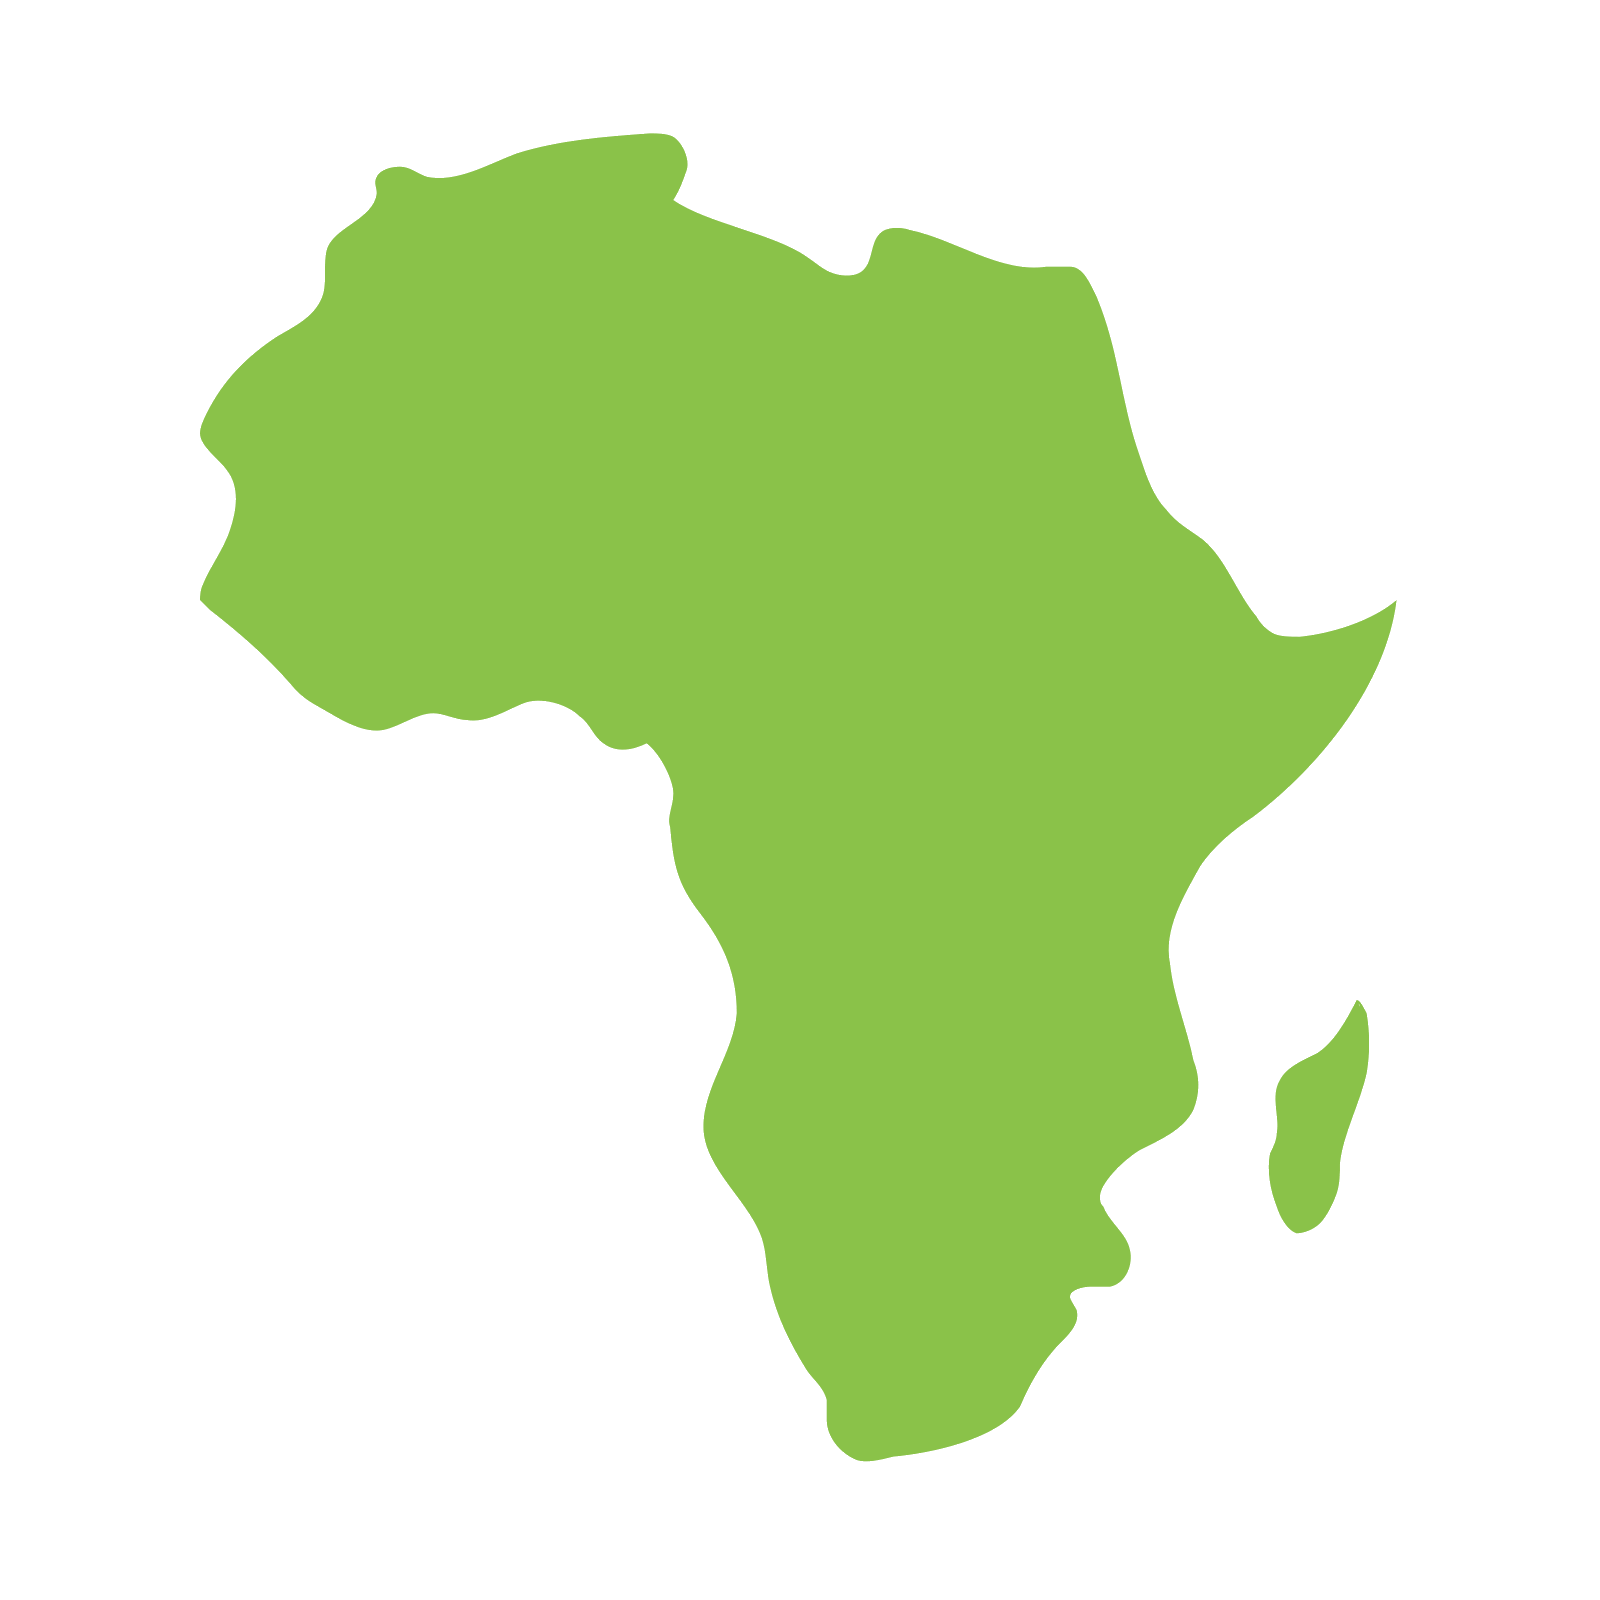 africa image